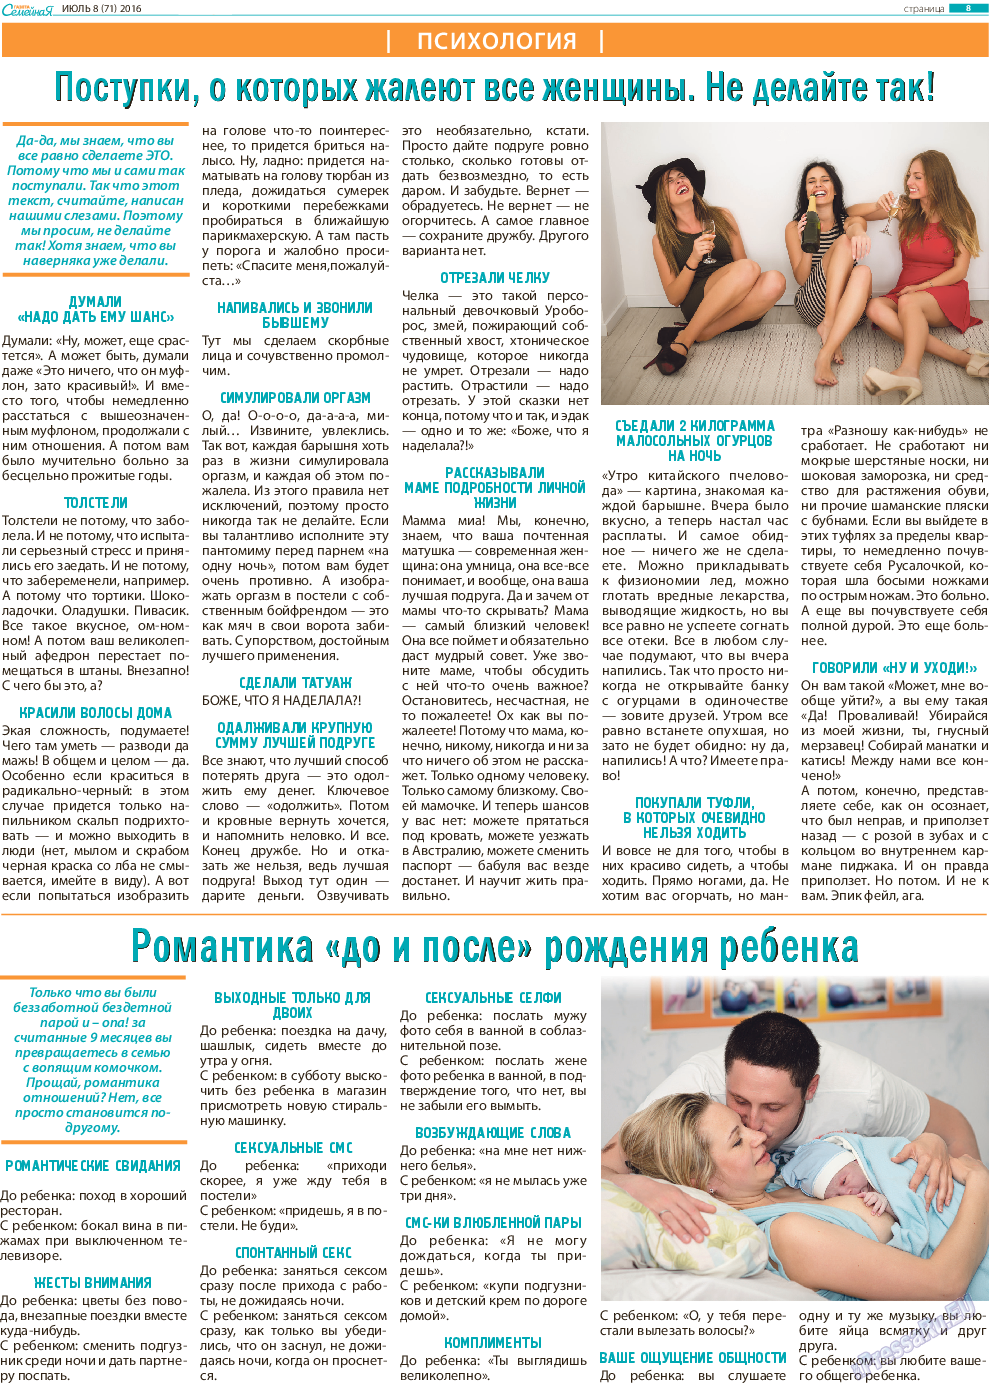 Семейная газета (газета). 2016 год, номер 8, стр. 8